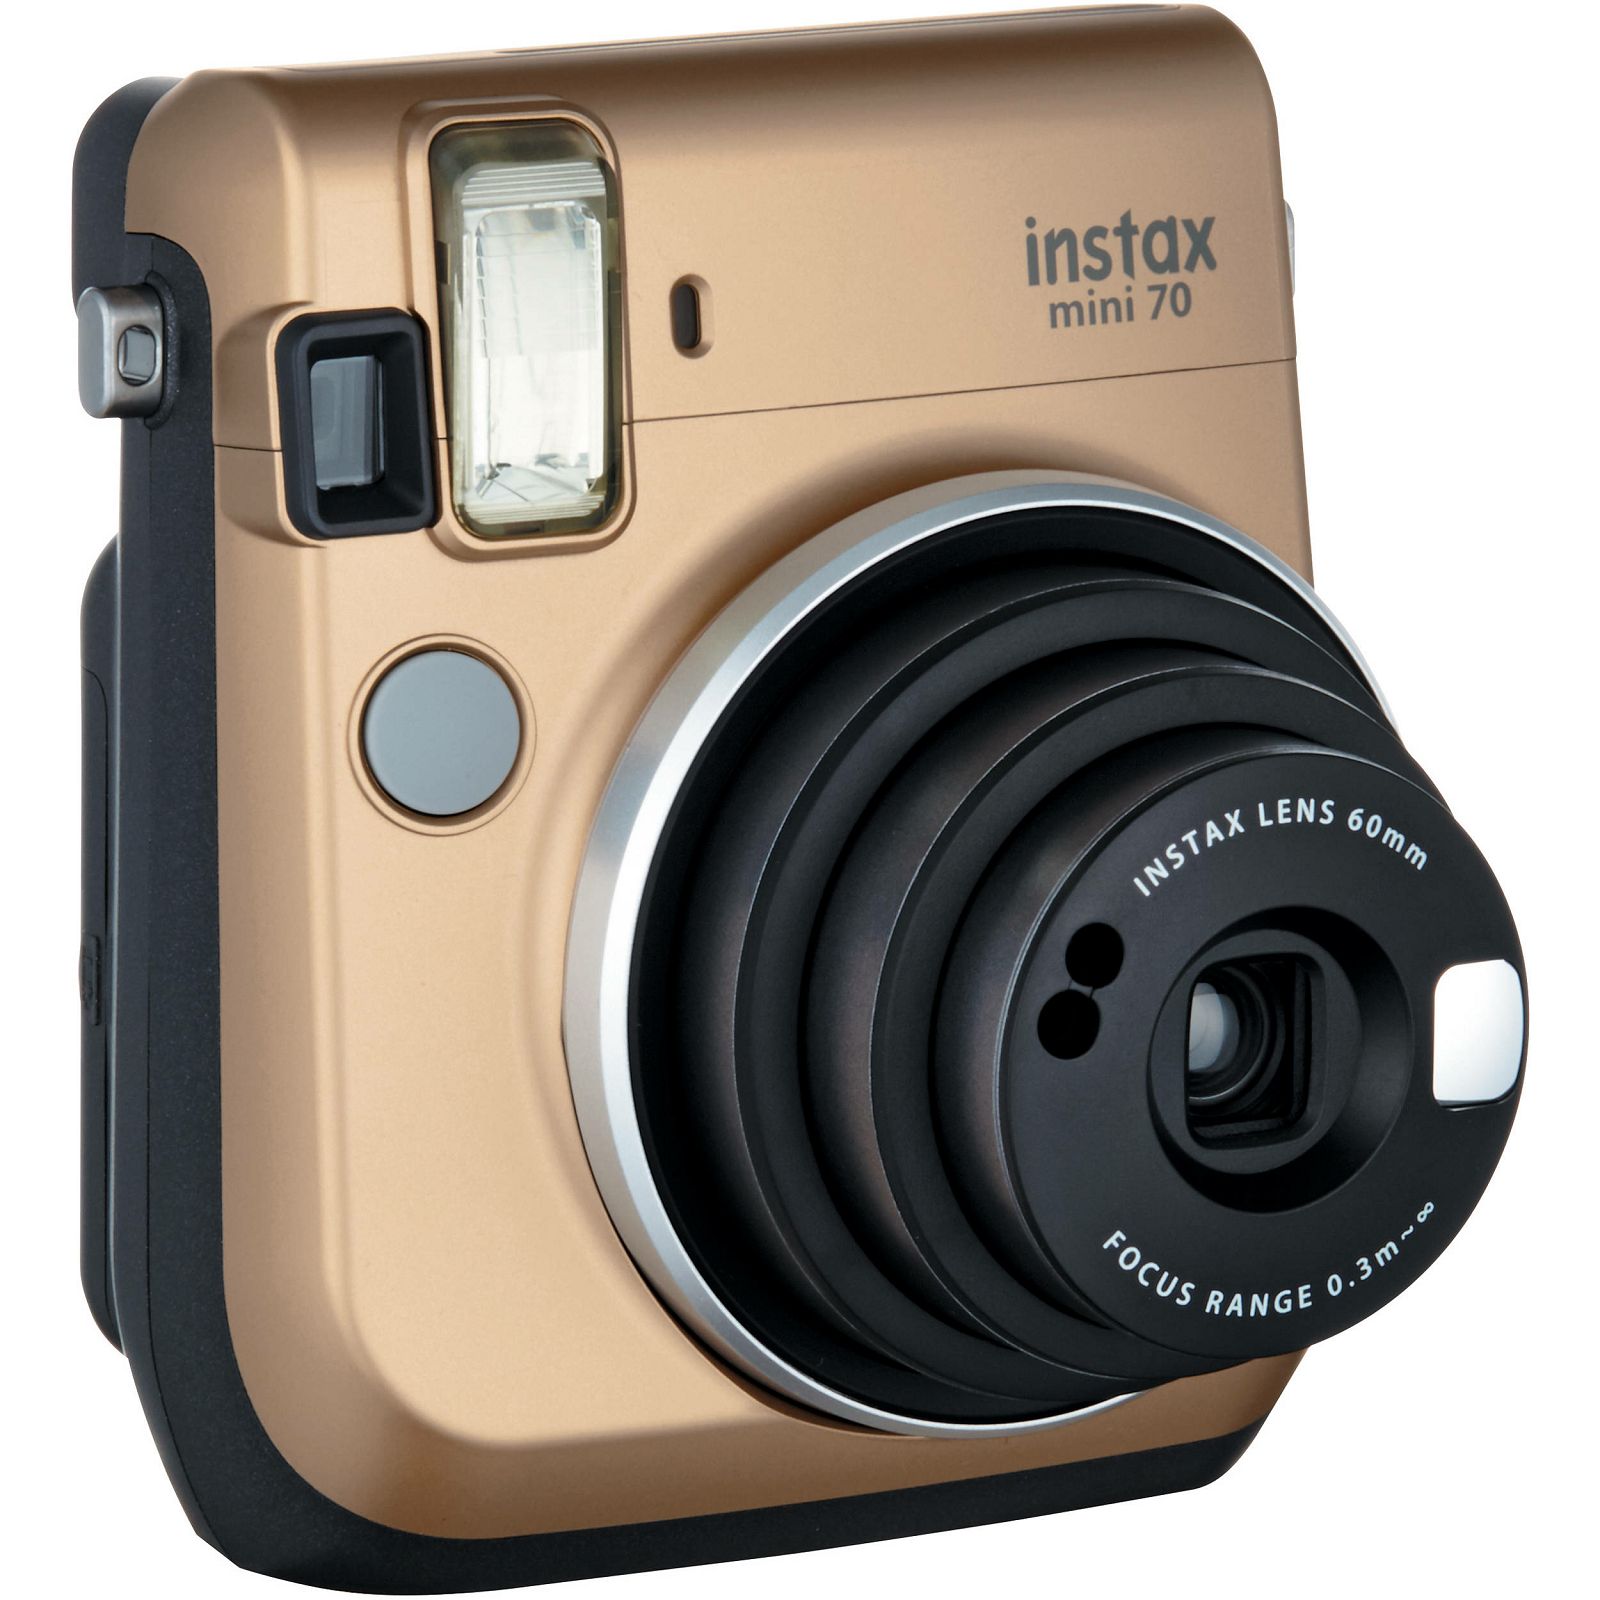 Fujifilm Instax mini 70 Instant Film Camera (Gold) Zlatni Fuji polaroidni fotoaparat s trenutnim ispisom fotografije